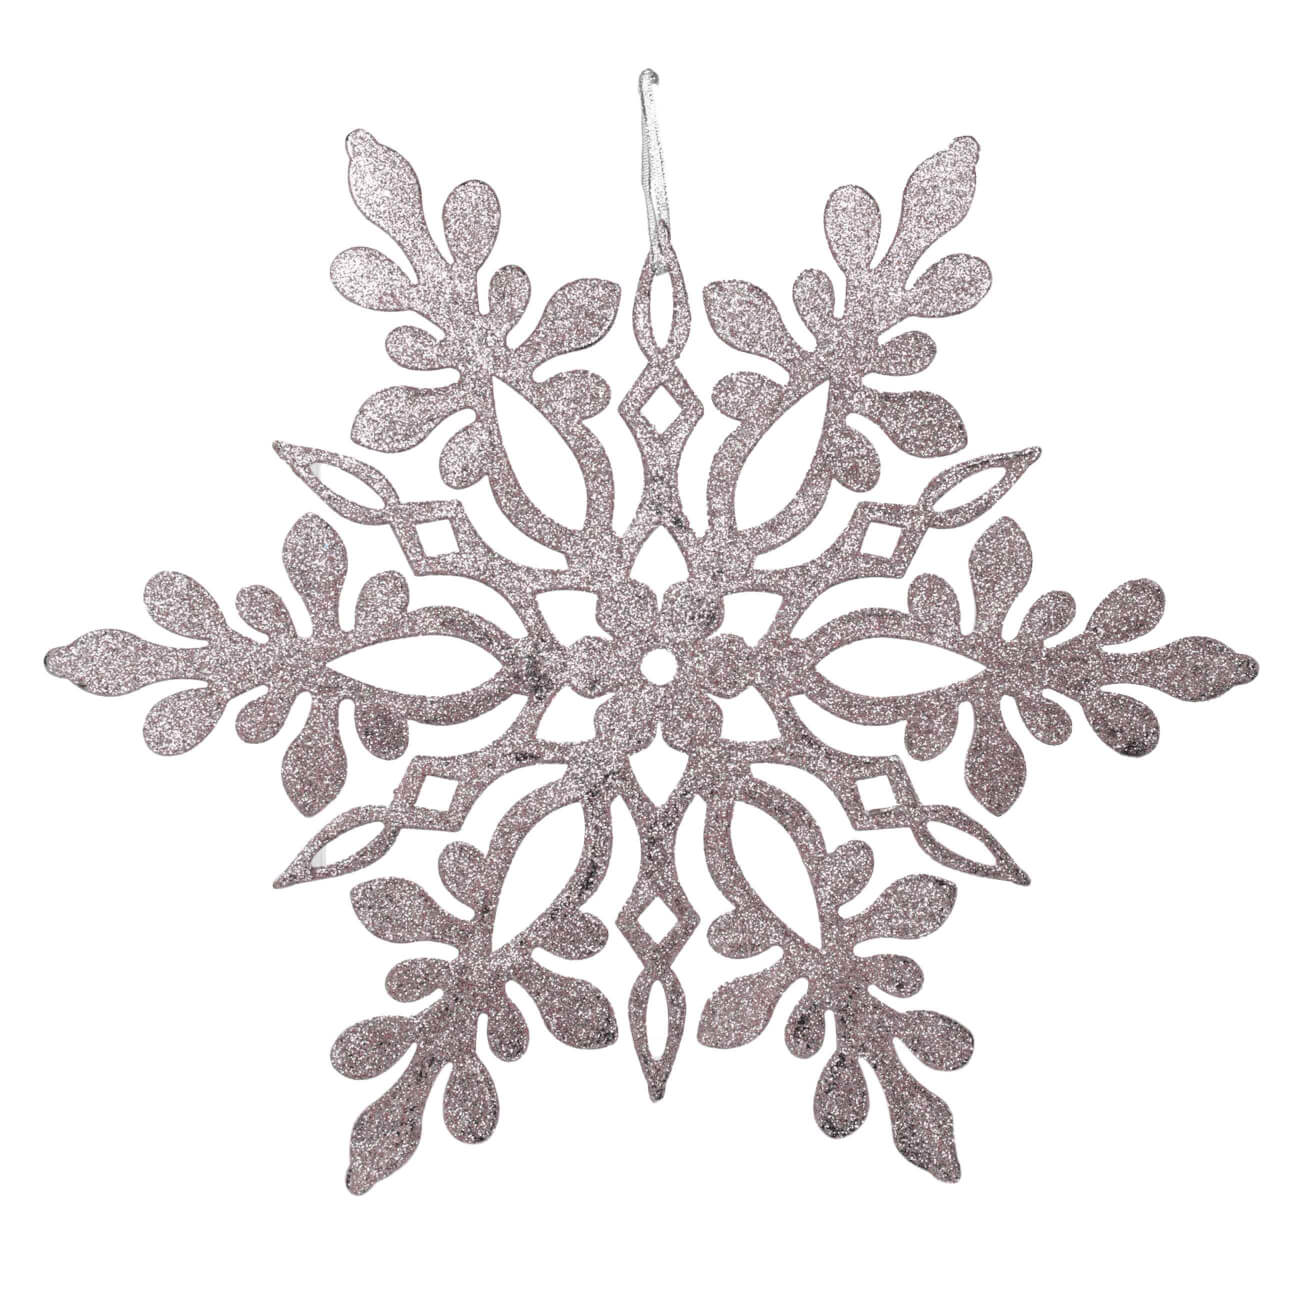 Украшение декоративное, 40 см, пластик, серебристое, Снежинка, Big snowflake - фото 1